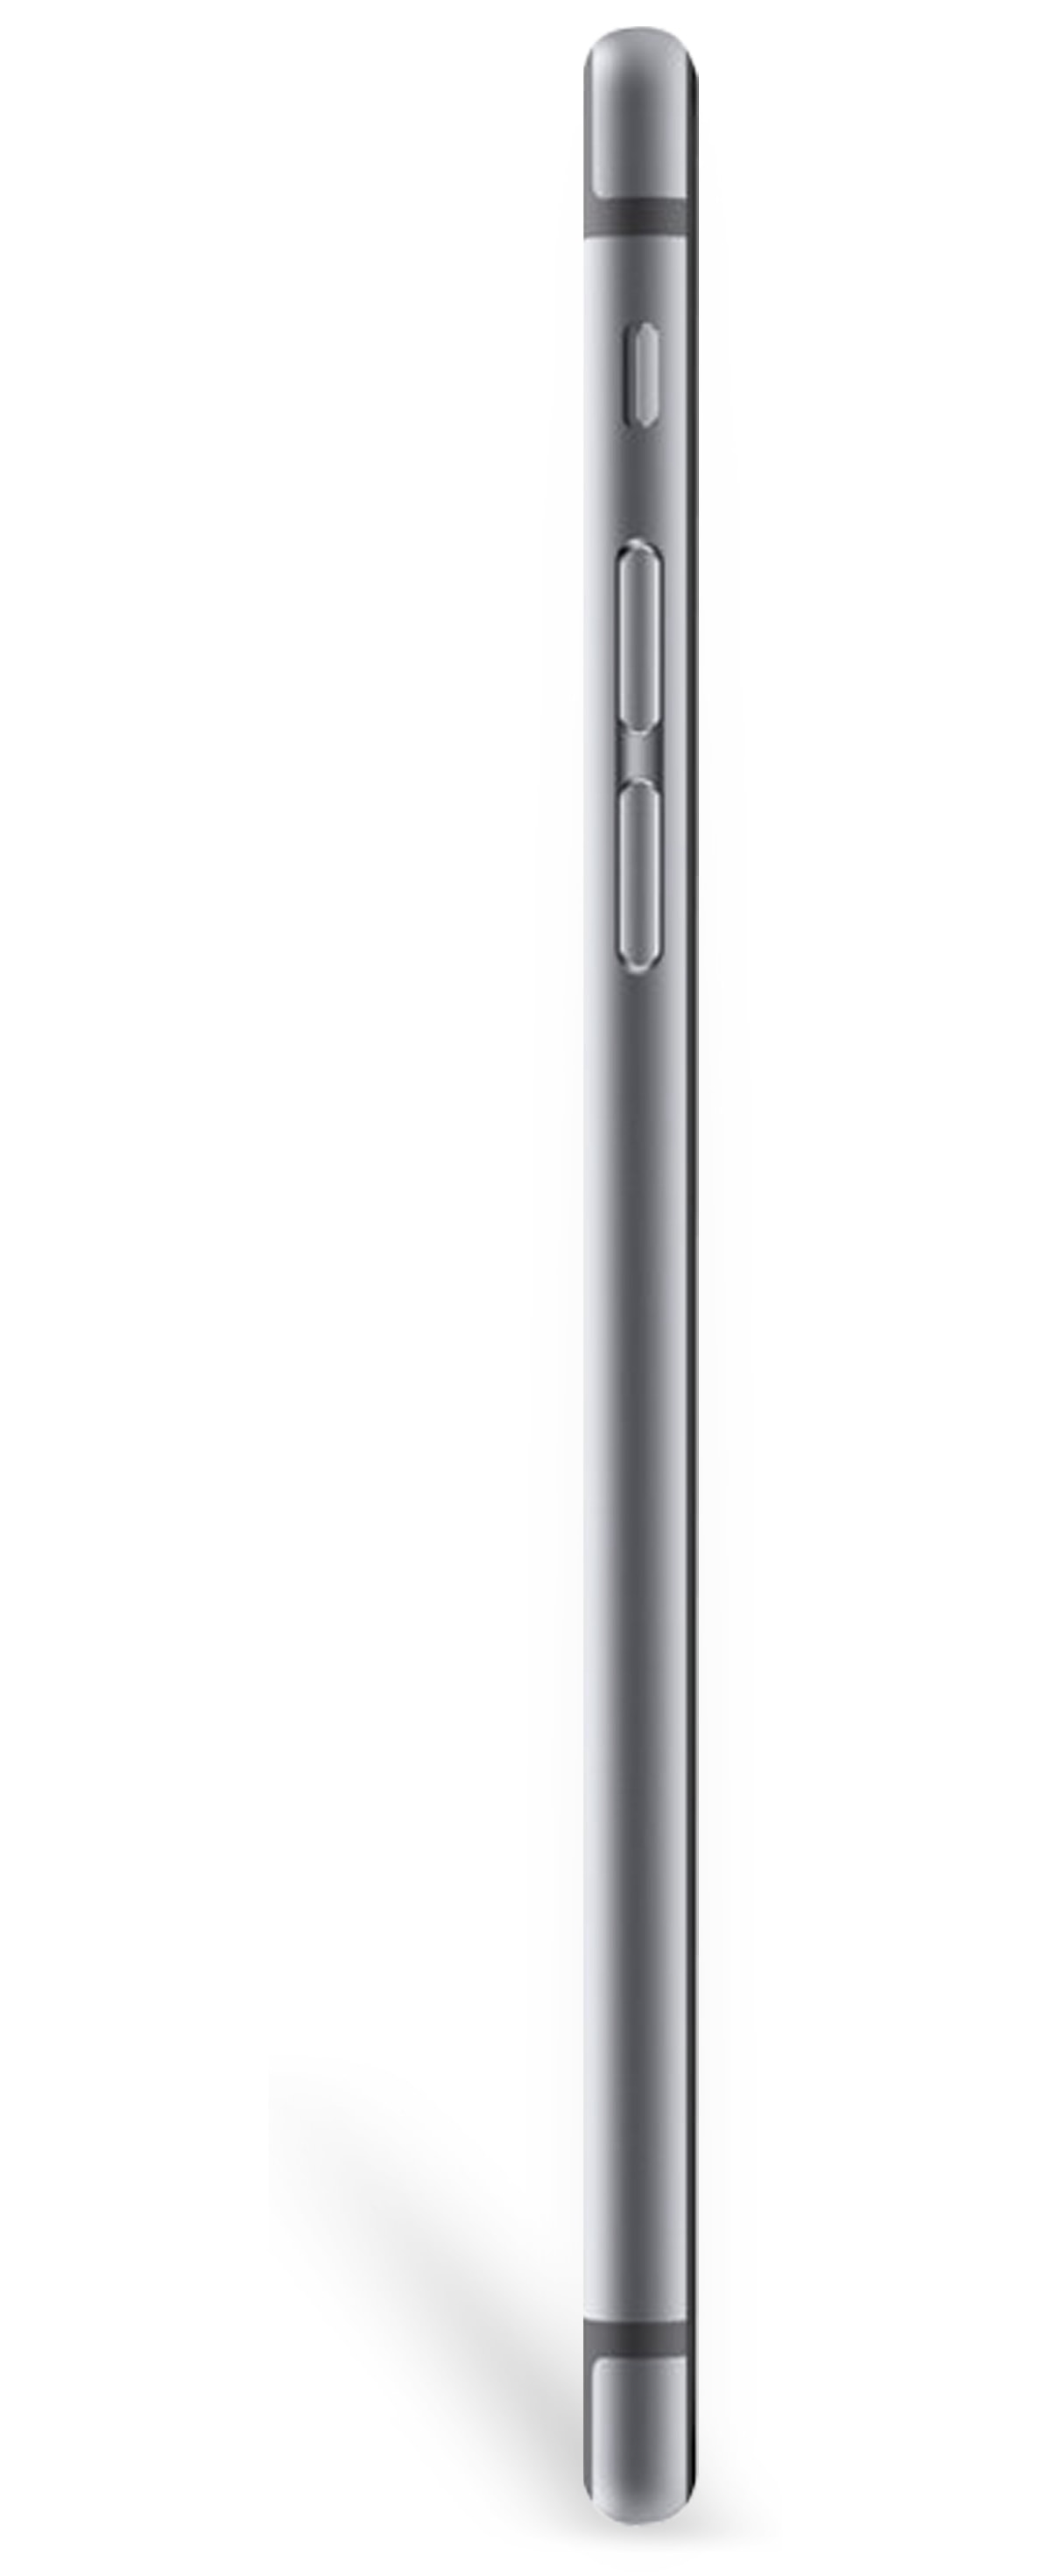 Apple Smartphone iPhone 6, 16 GB, silber, B-Ware